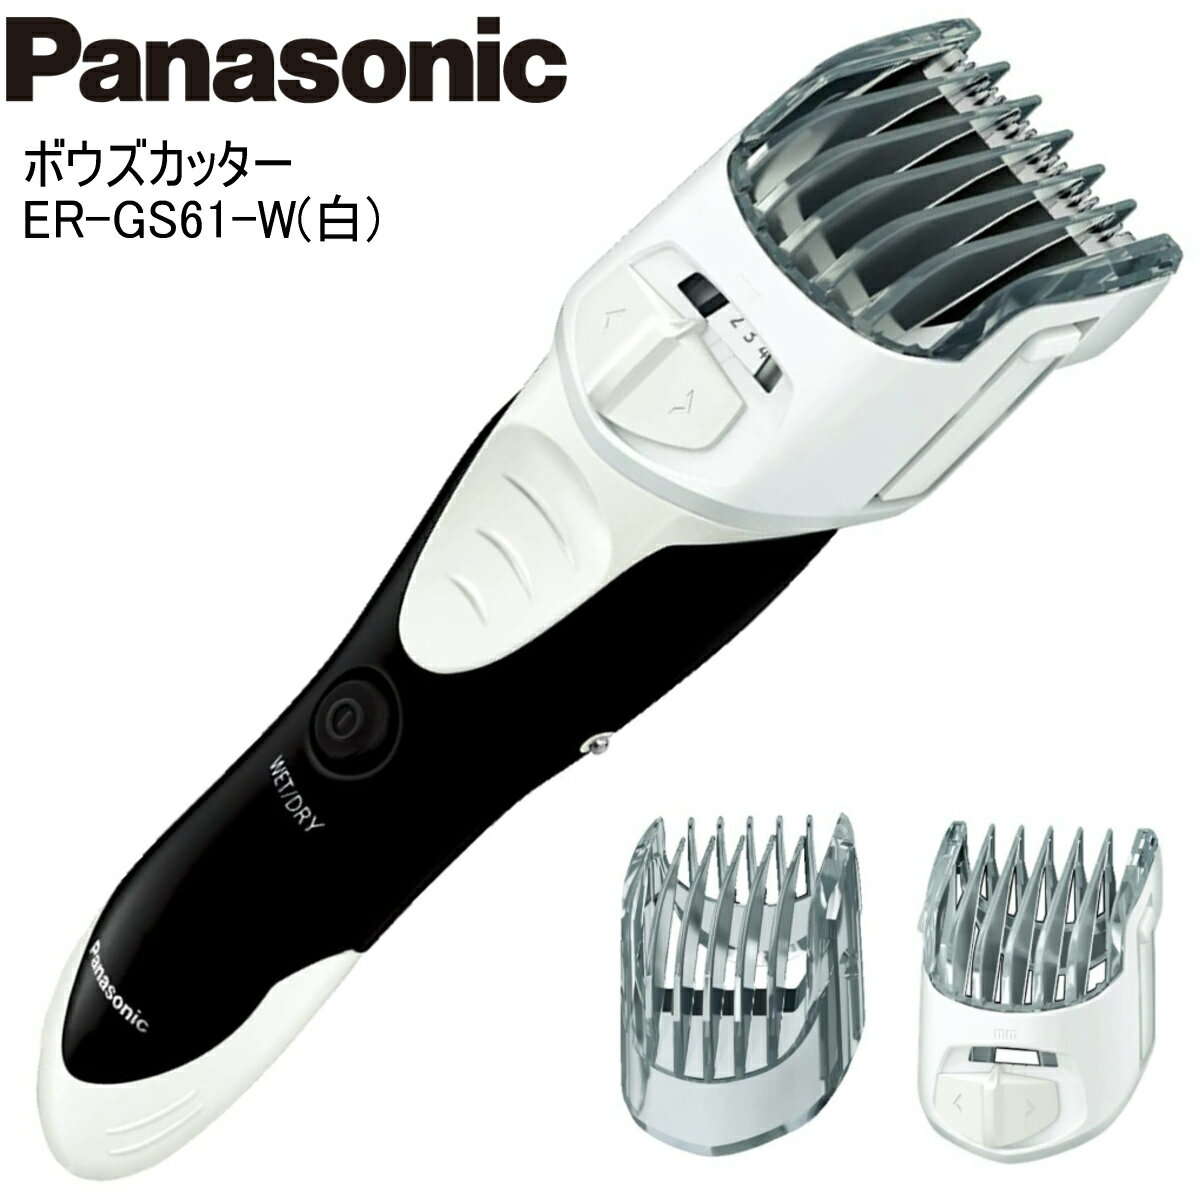  Panasonic パナソニック ボウズカッター ER-GS61-W 白 バリカン 充電式 水洗い